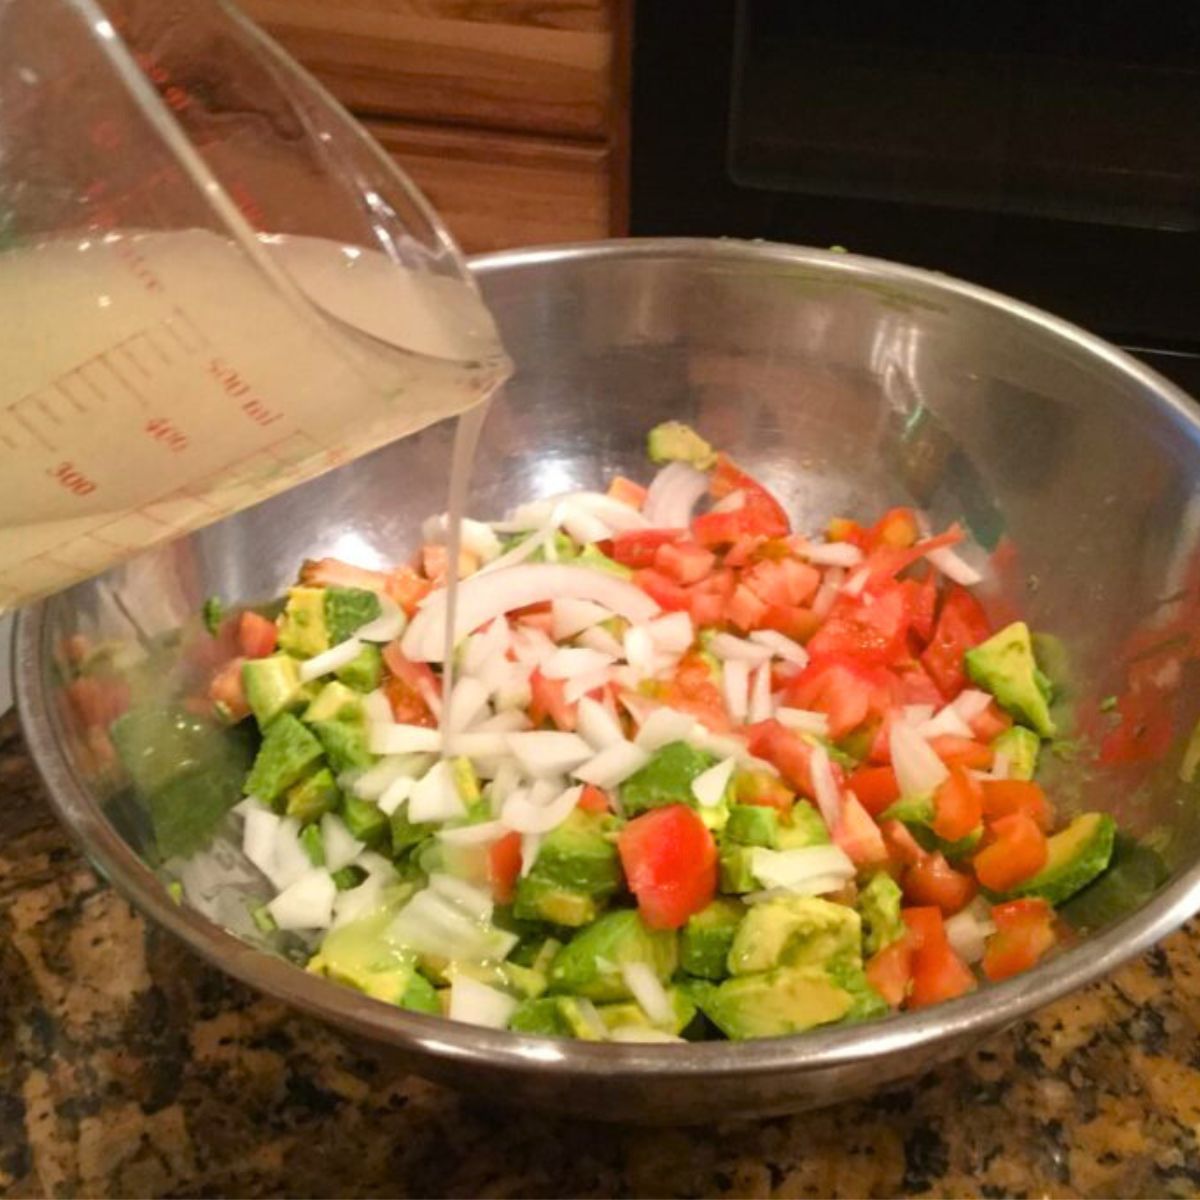 Easy Avocado Tomato Salad Recipe